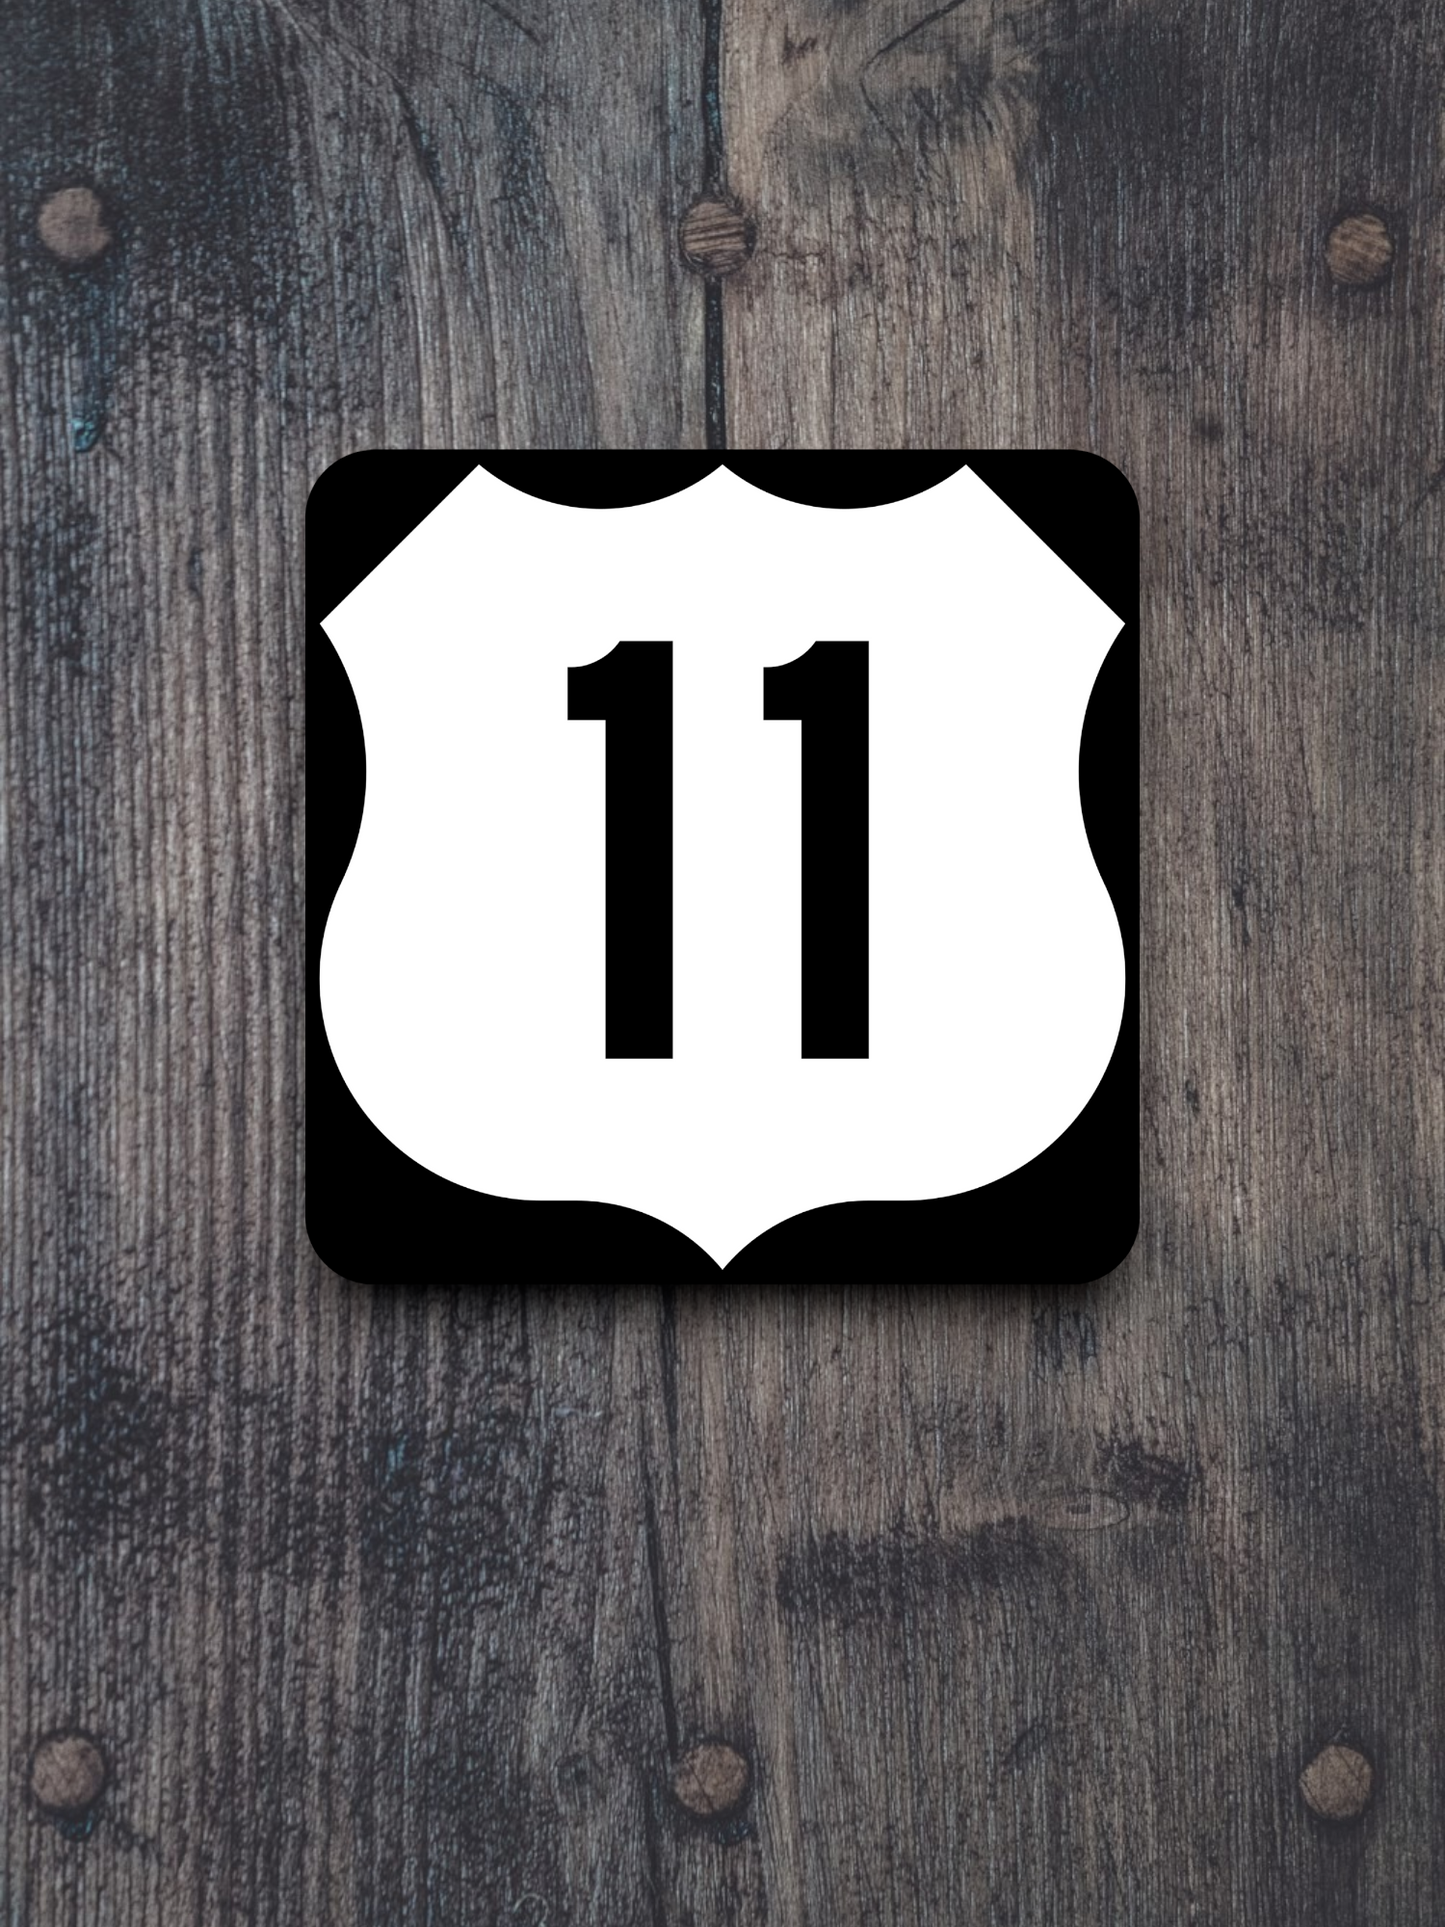 U.S. Route 11 Road Sign Sticker